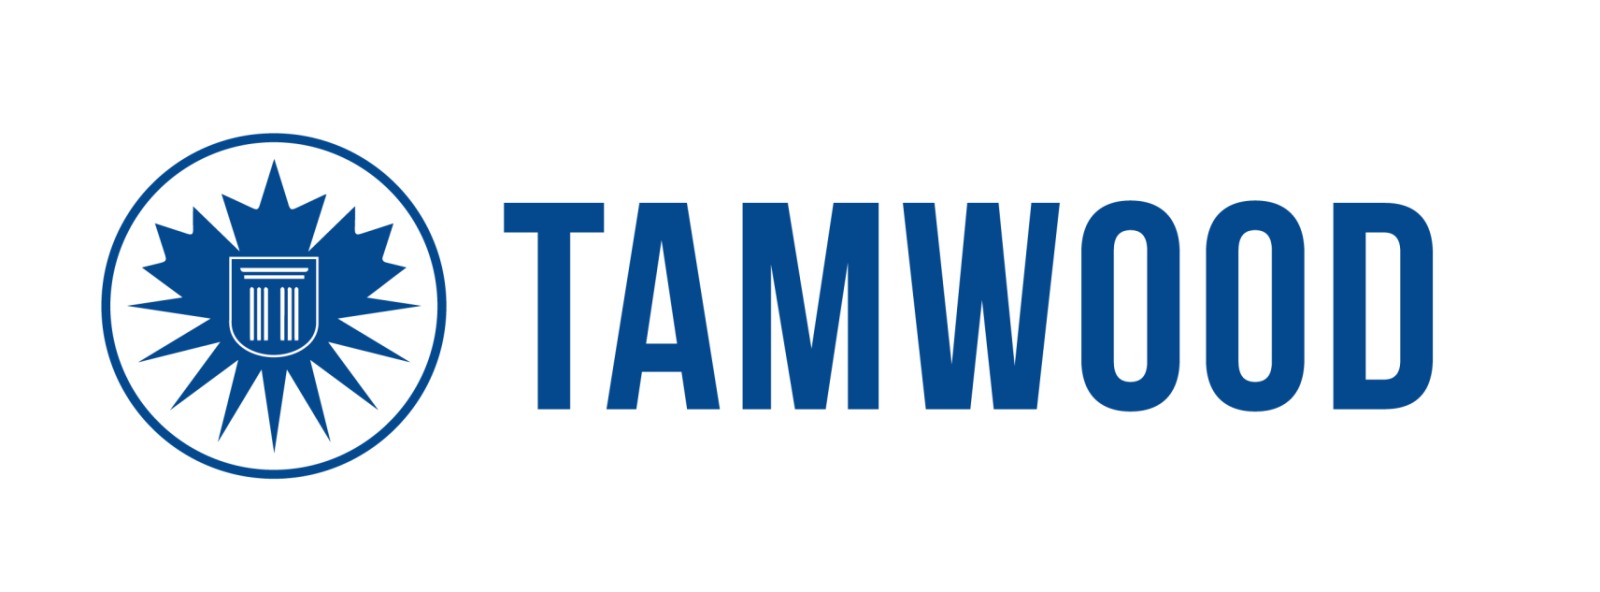 Tamwood